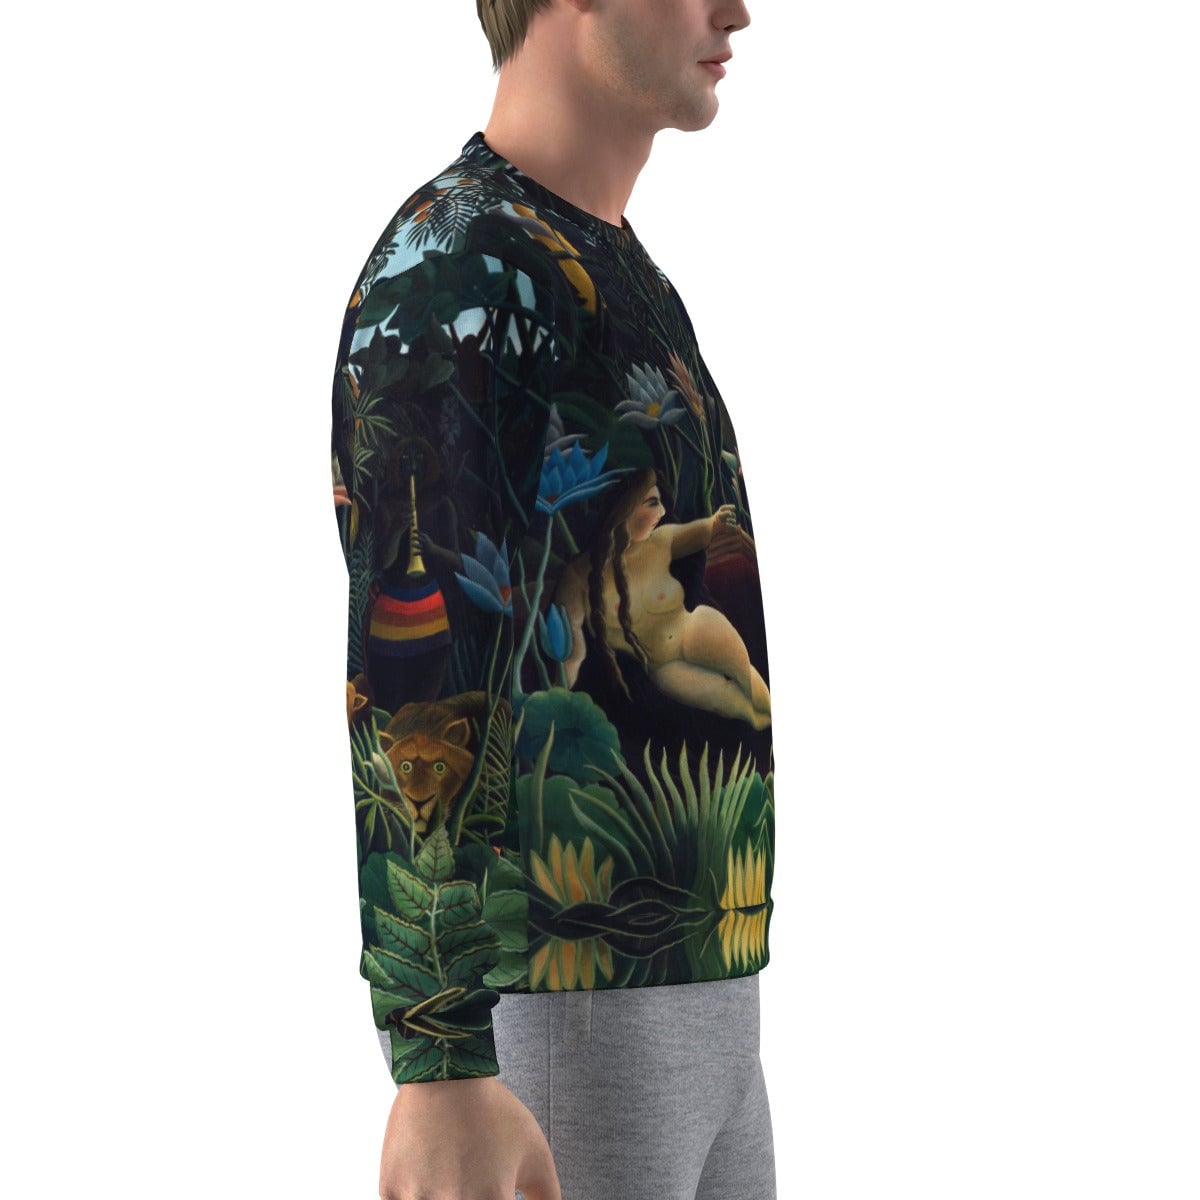 Henri Rousseau’s The Dream Art Sweatshirt